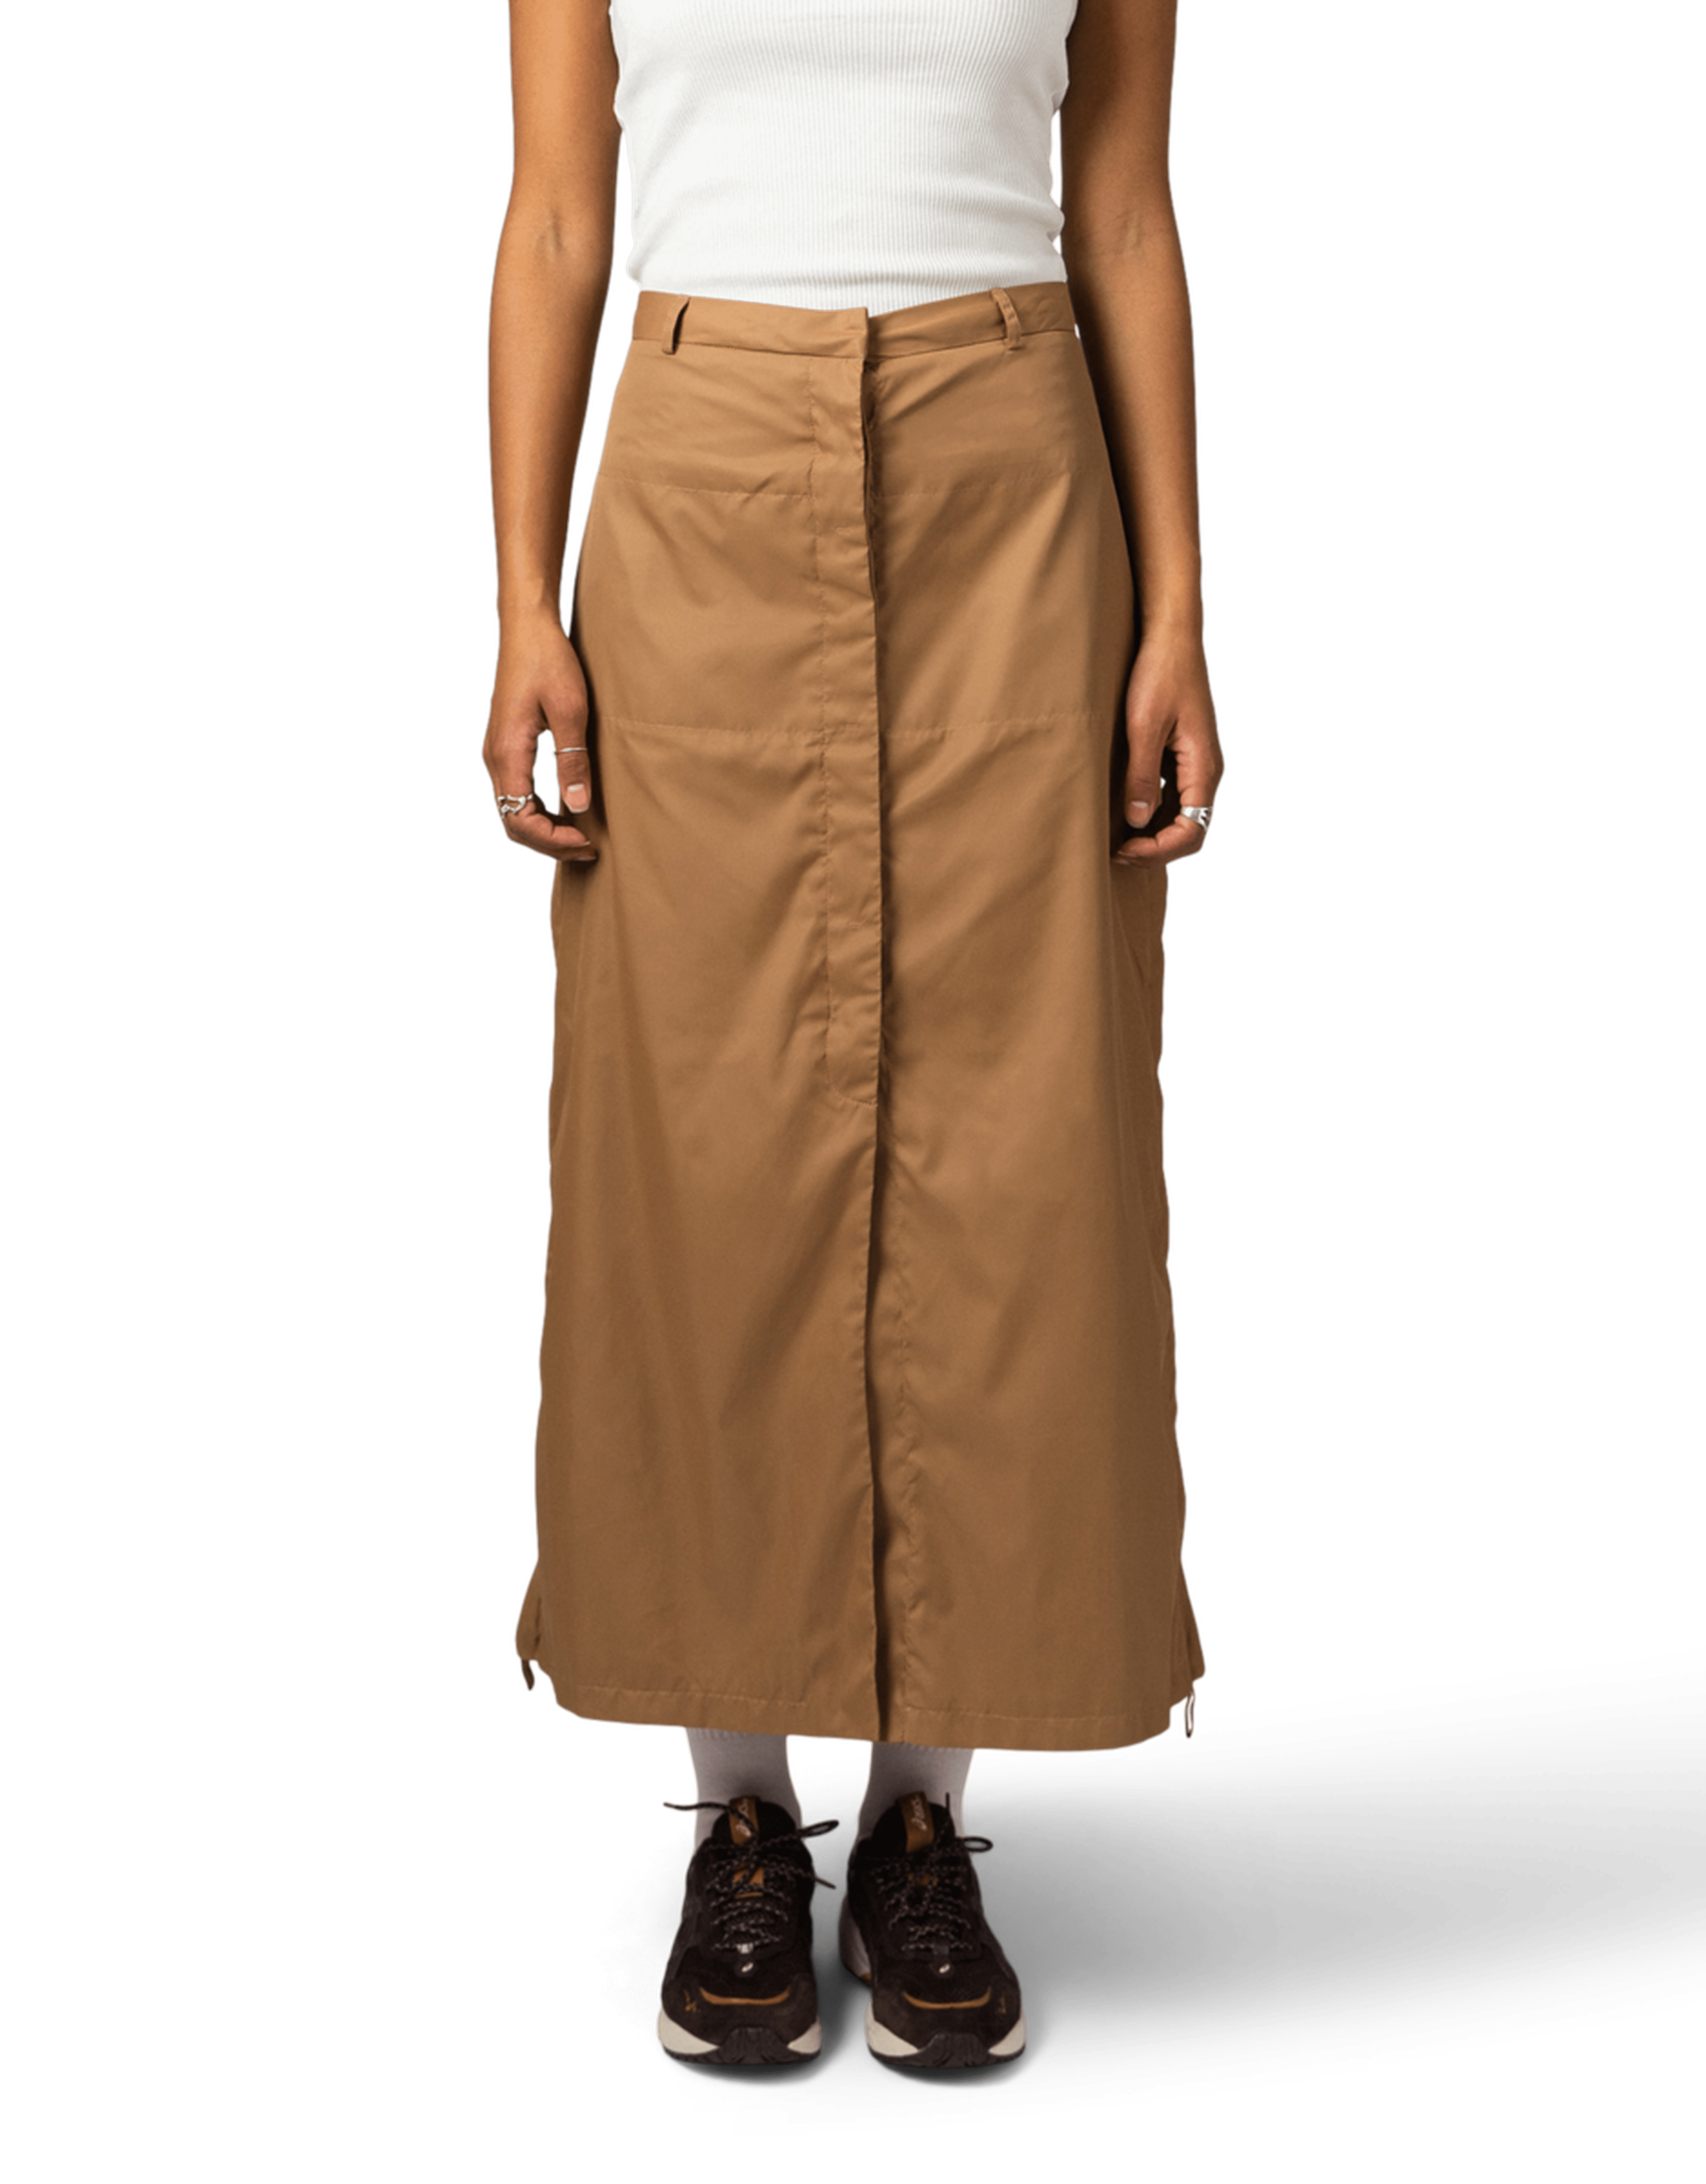 Cayla Skirt